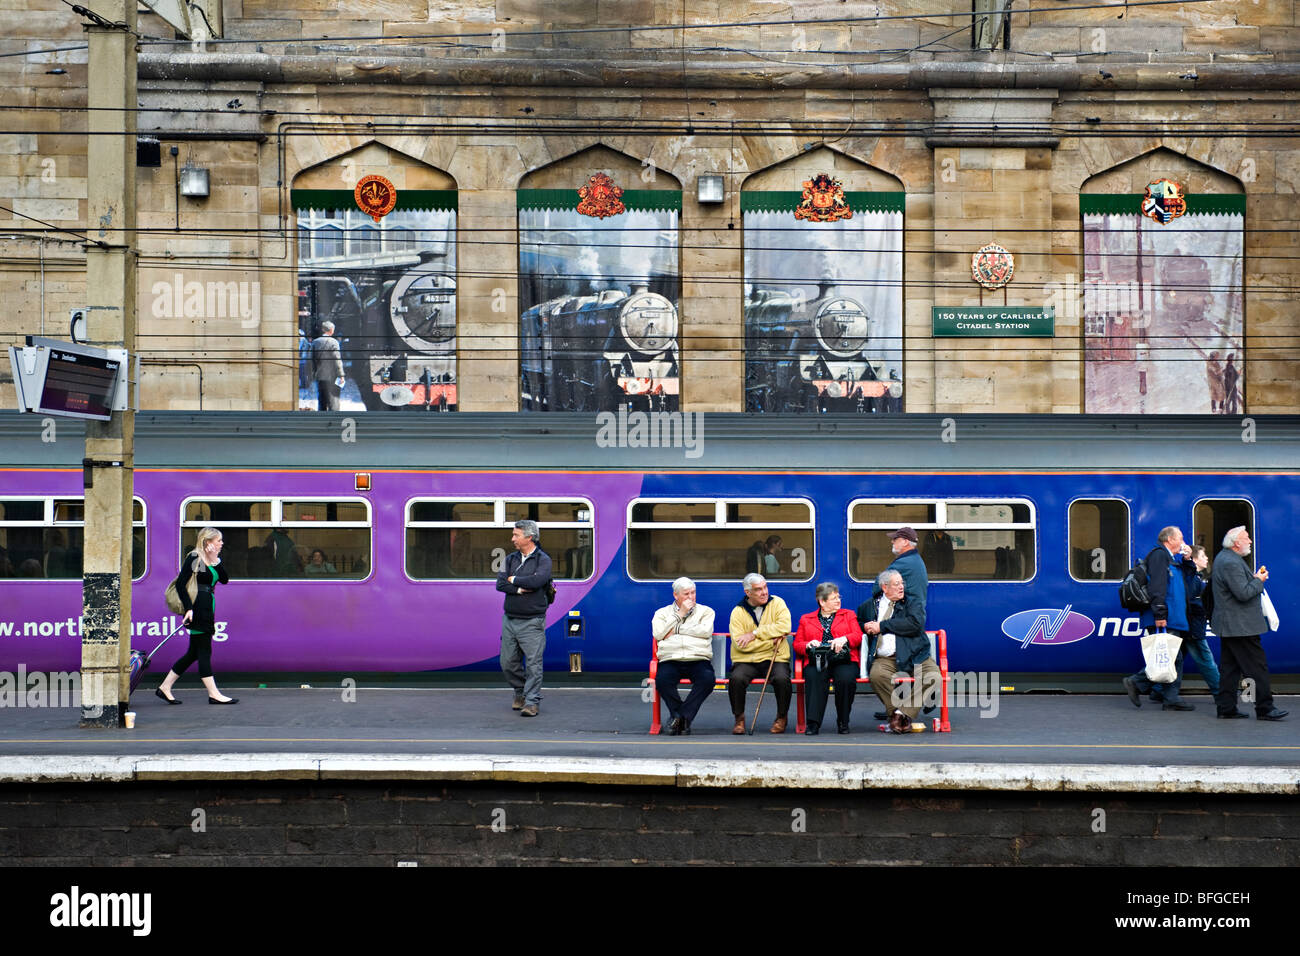 Carlisle Railway Station, UK with steam era murals on the wall. Stock Photo